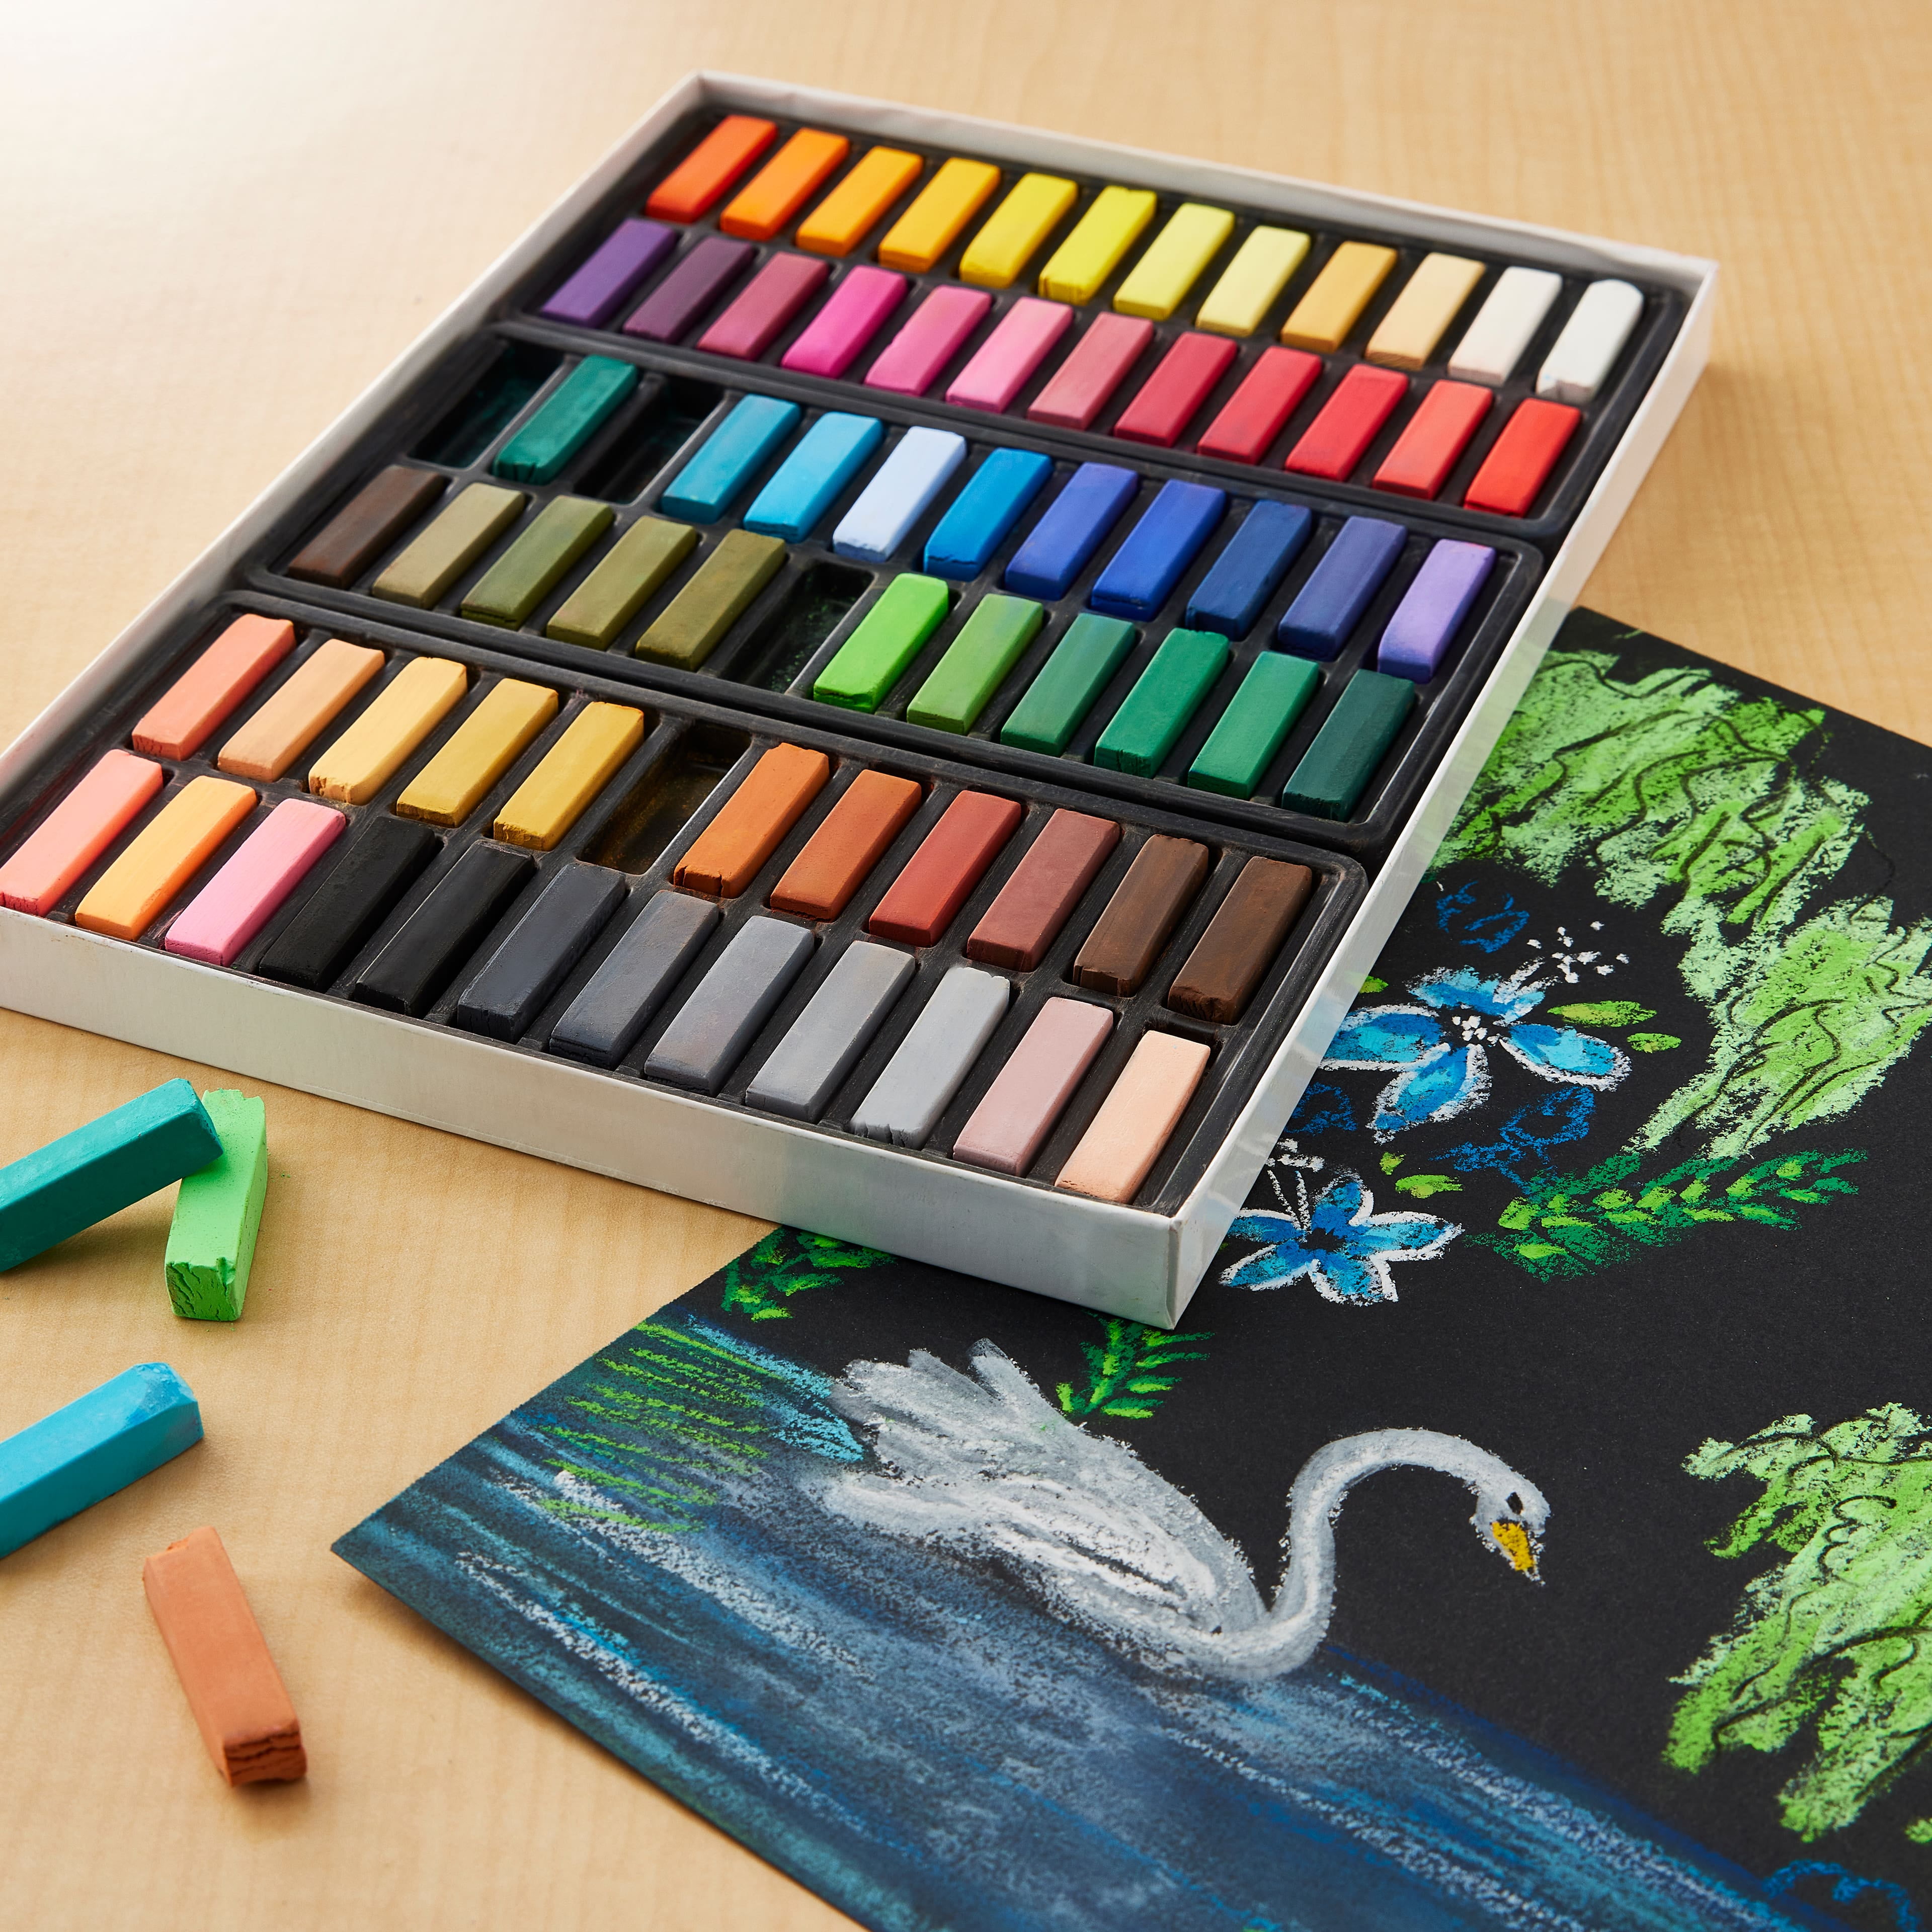 SPRING PASTELS Personalized Pencils Set of 5 Designer Color Combo